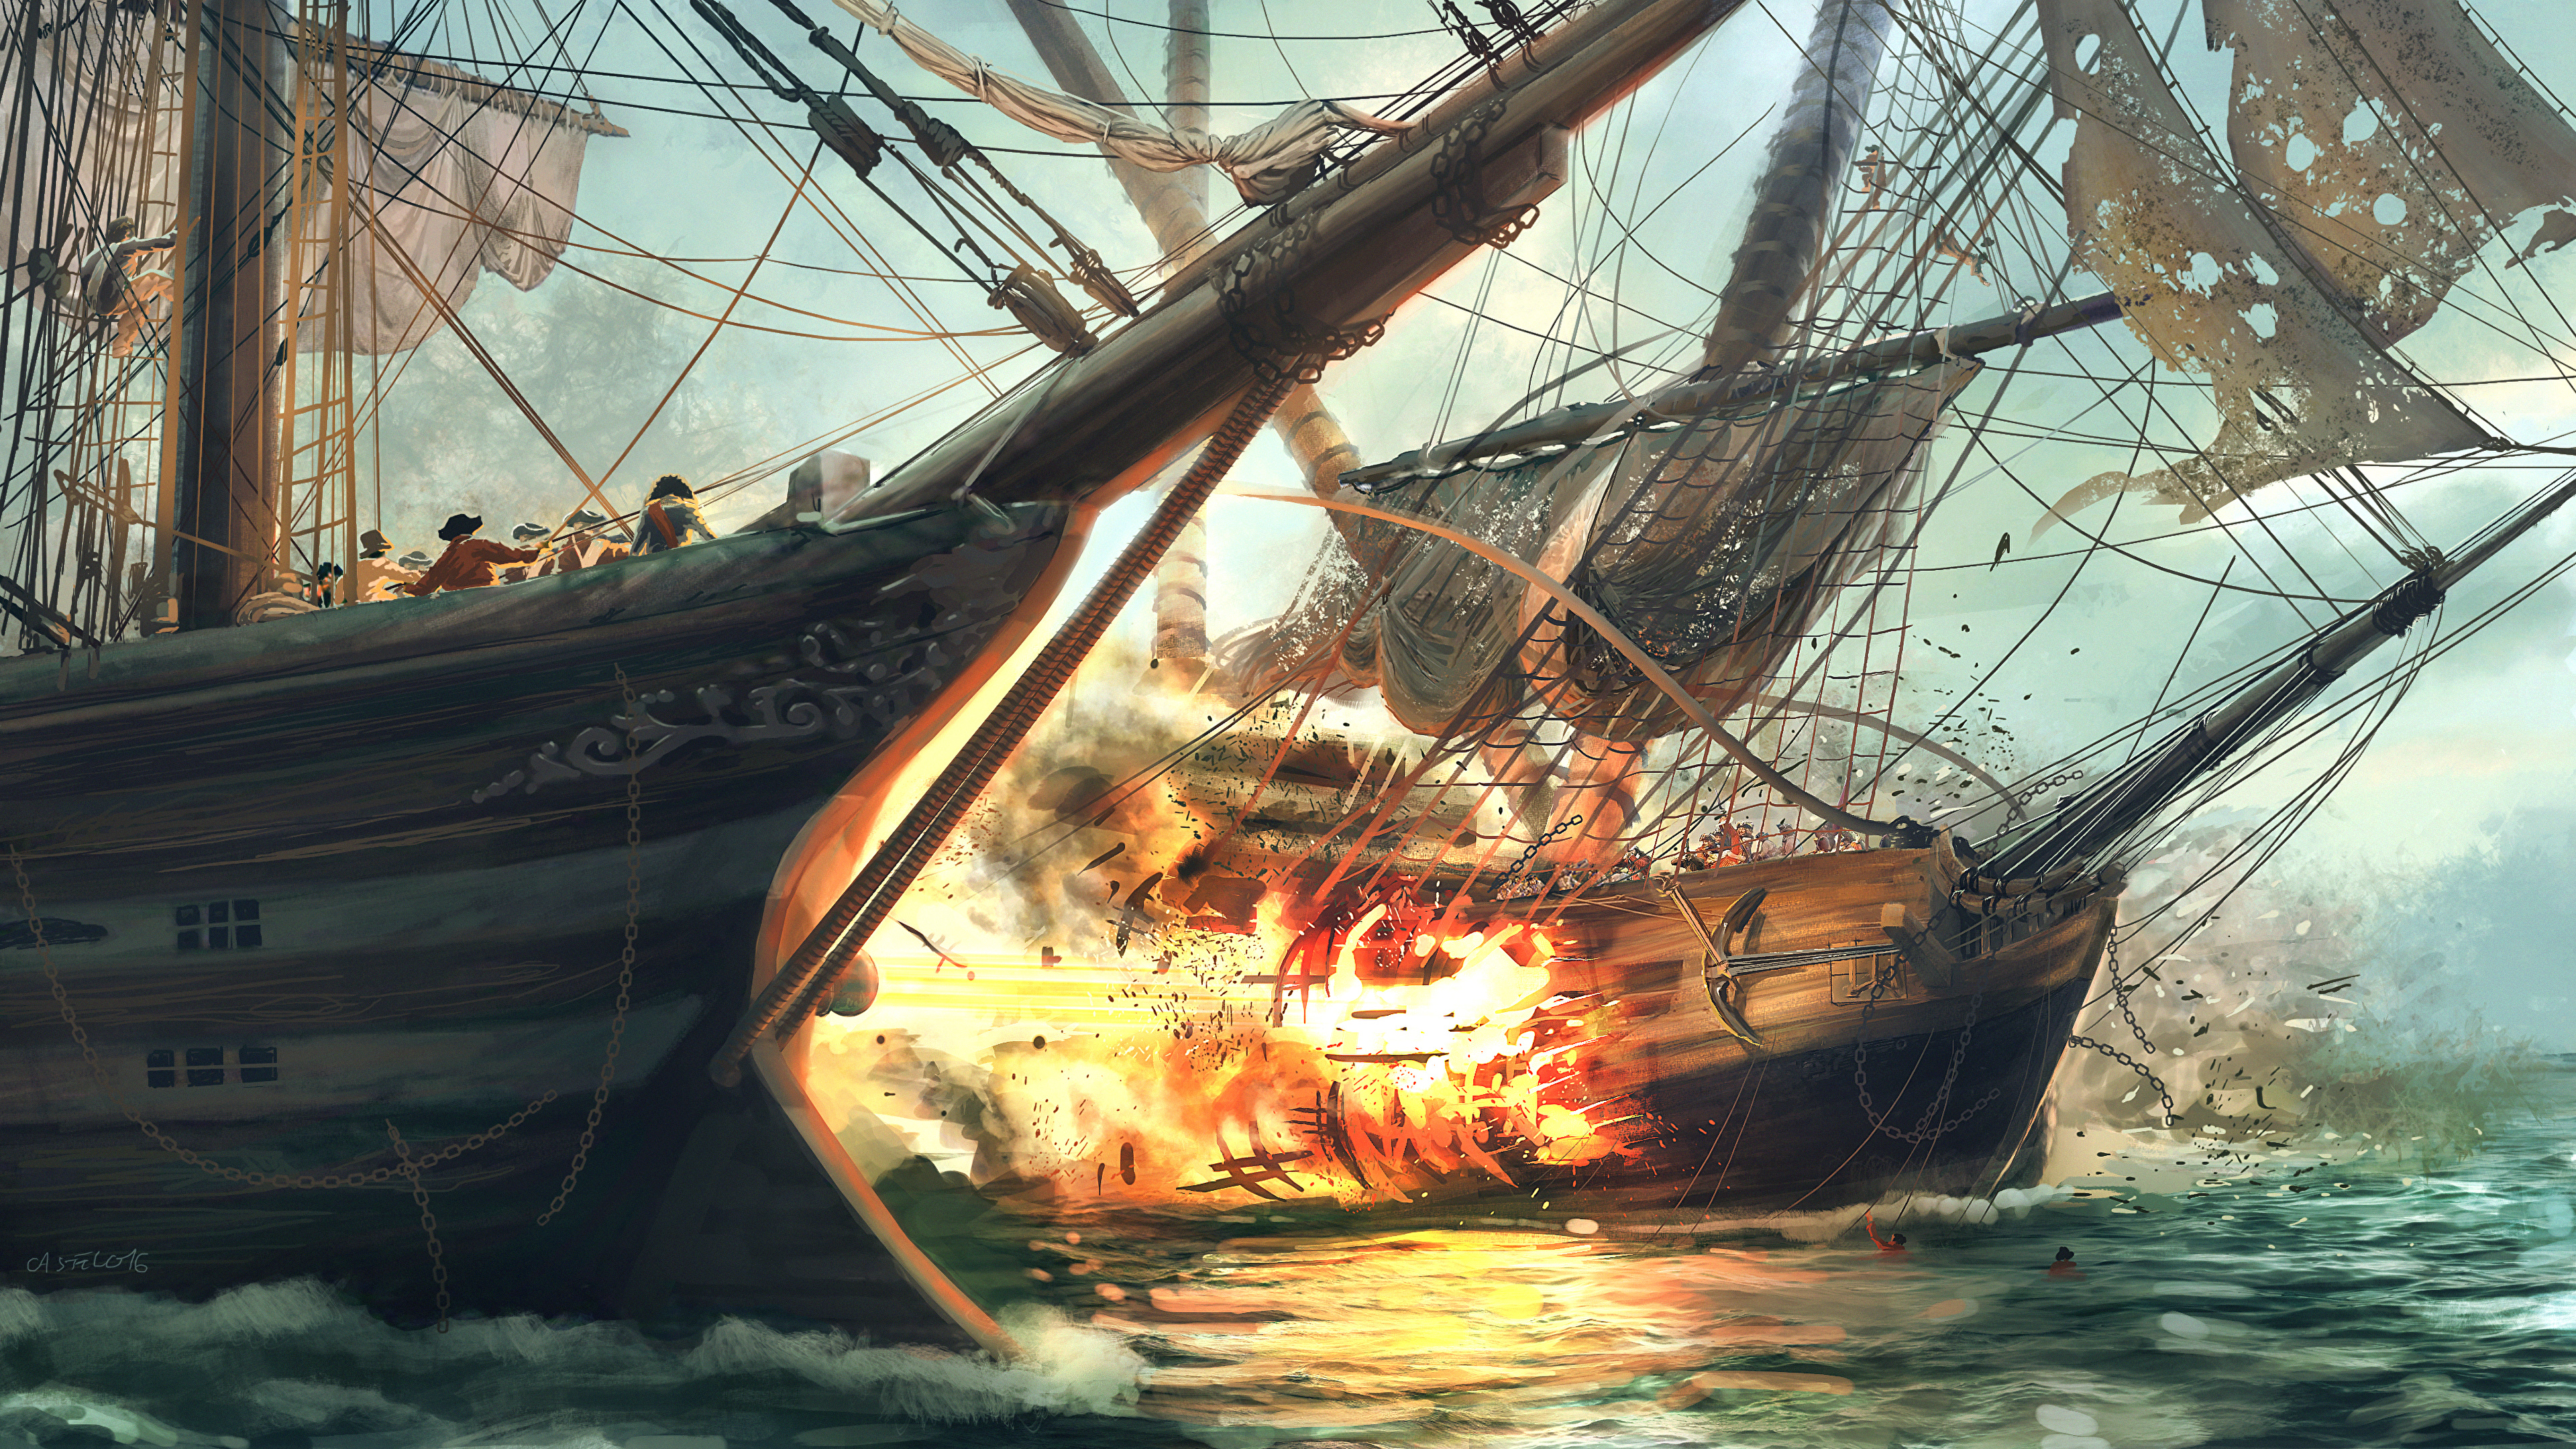 The ship sailed across. Корабли Карибского моря 17 век. Пираты Карибского моря битва на корабле.